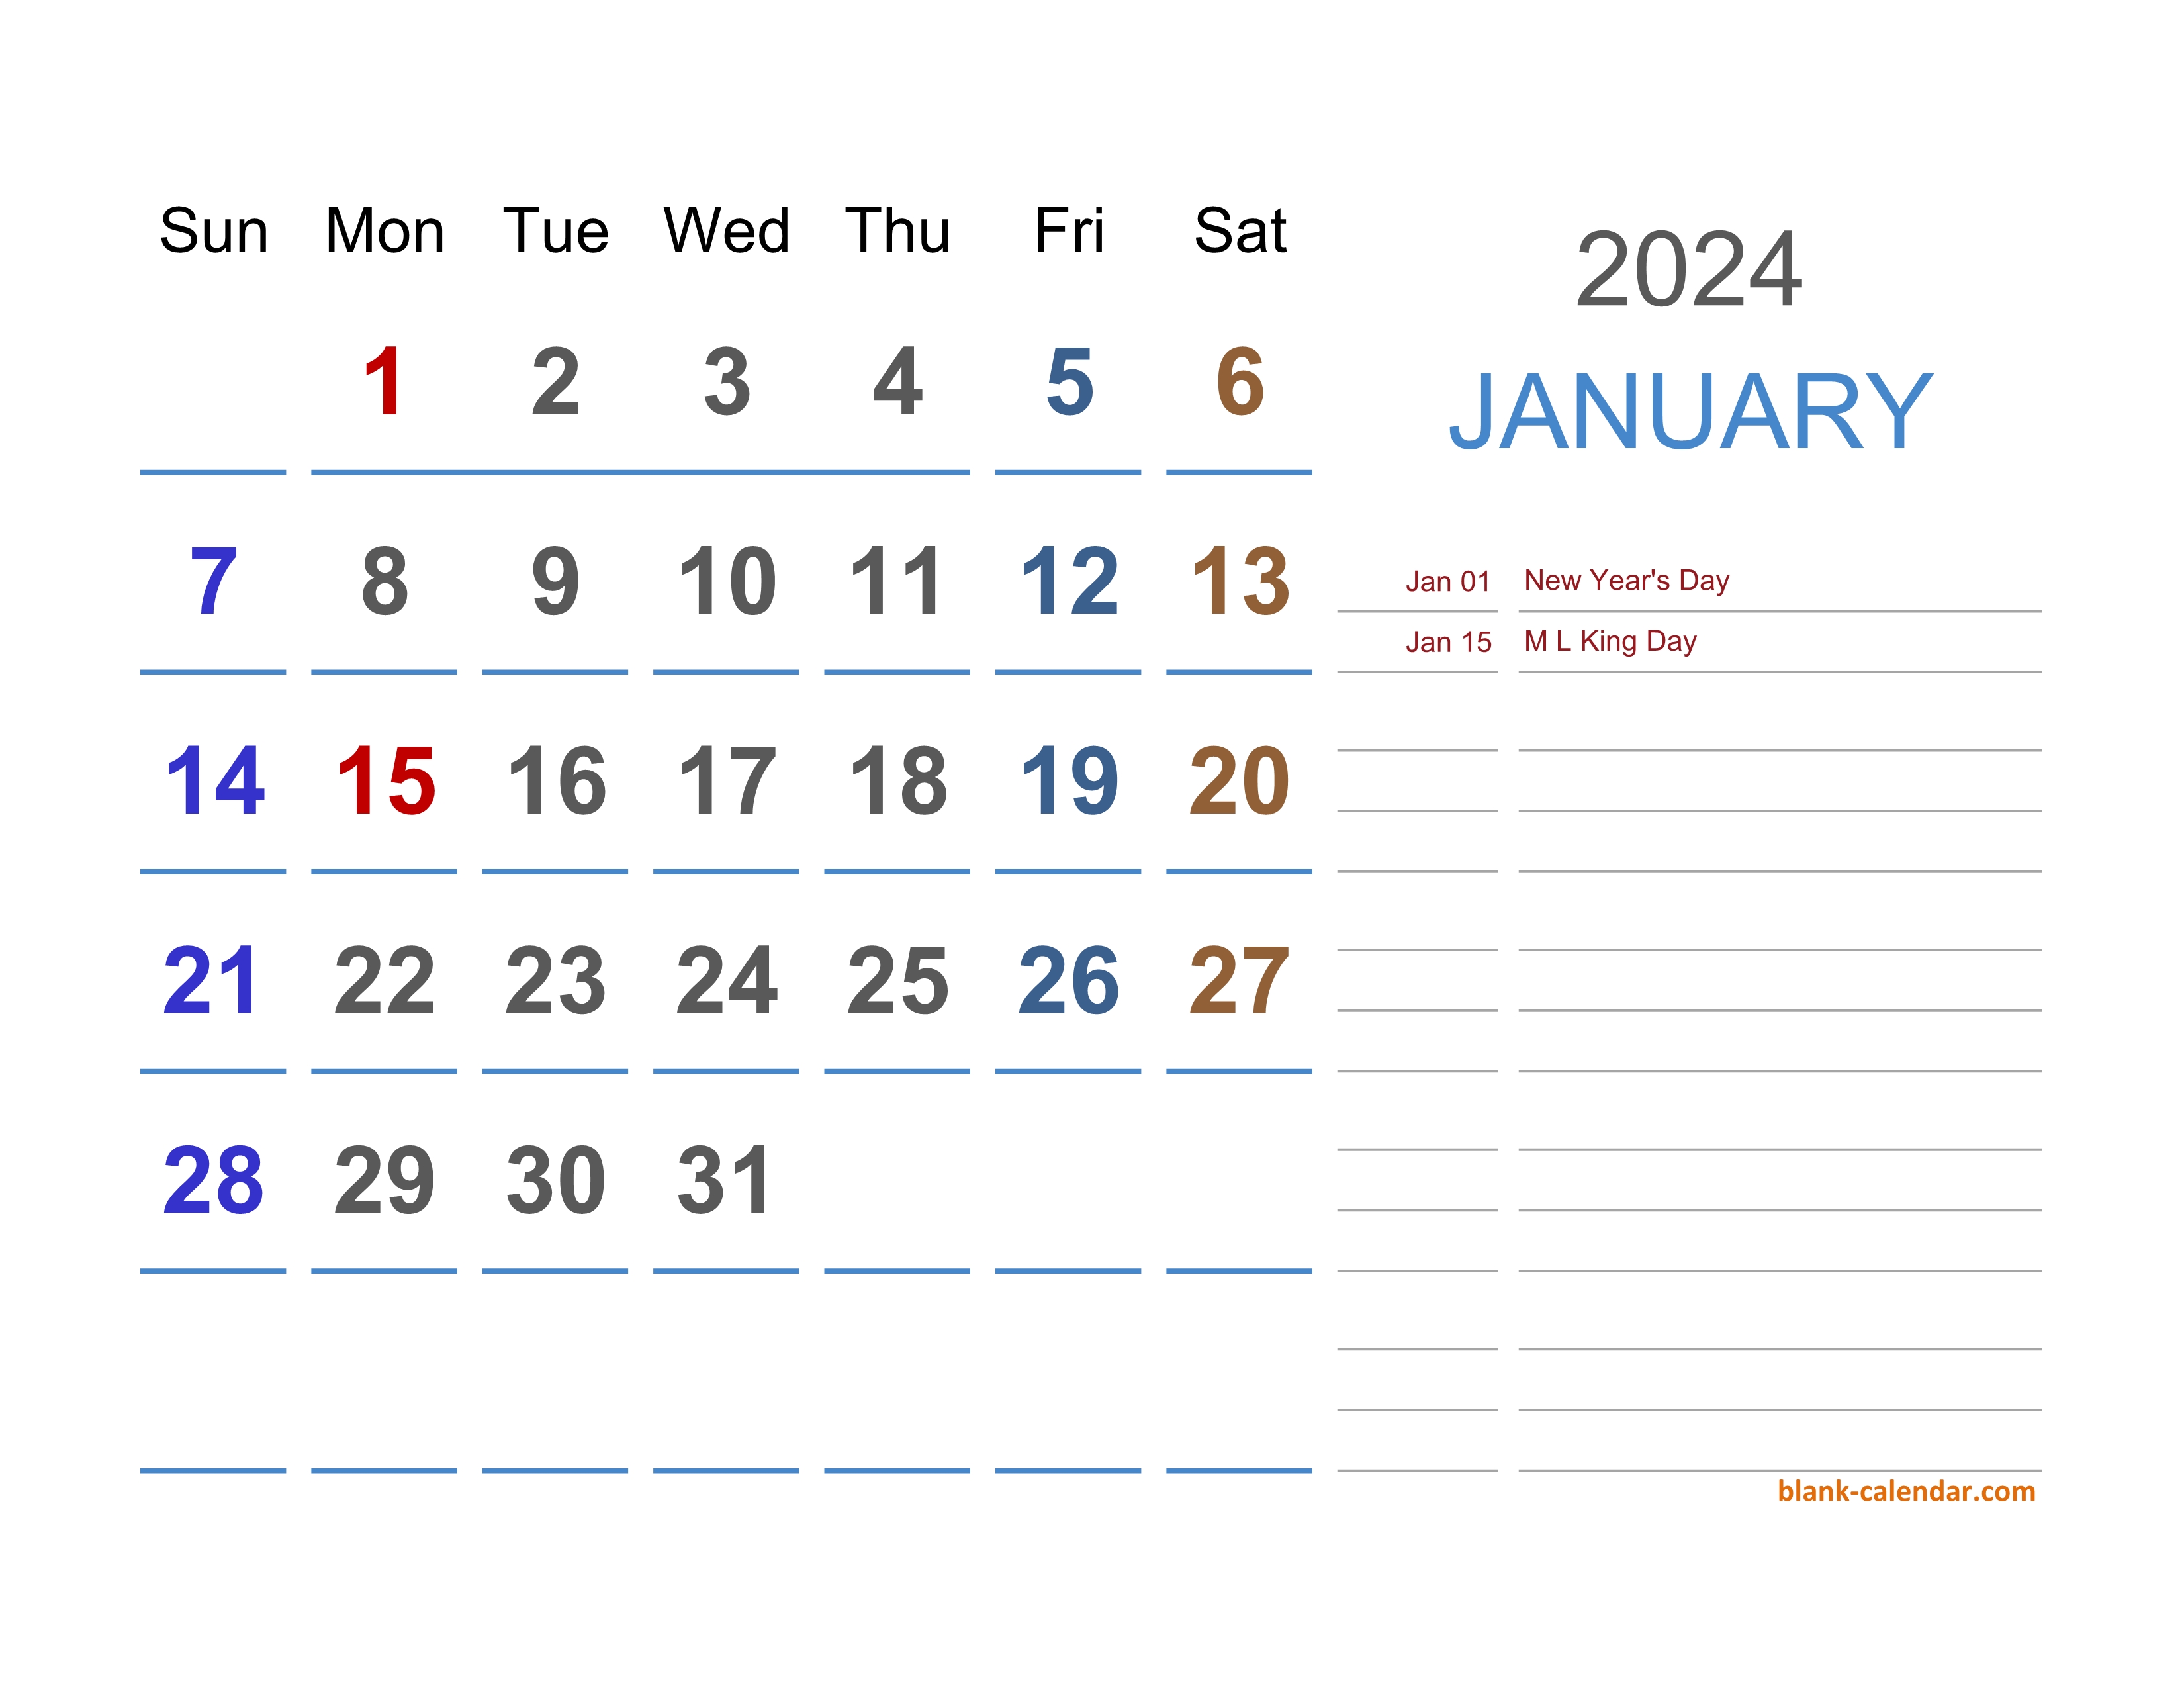 Календарь 2024 год нхл. Календарь на 2024 год. Календарь календарь 2024. Календарь 2024 эксель. Календарь март 2024.